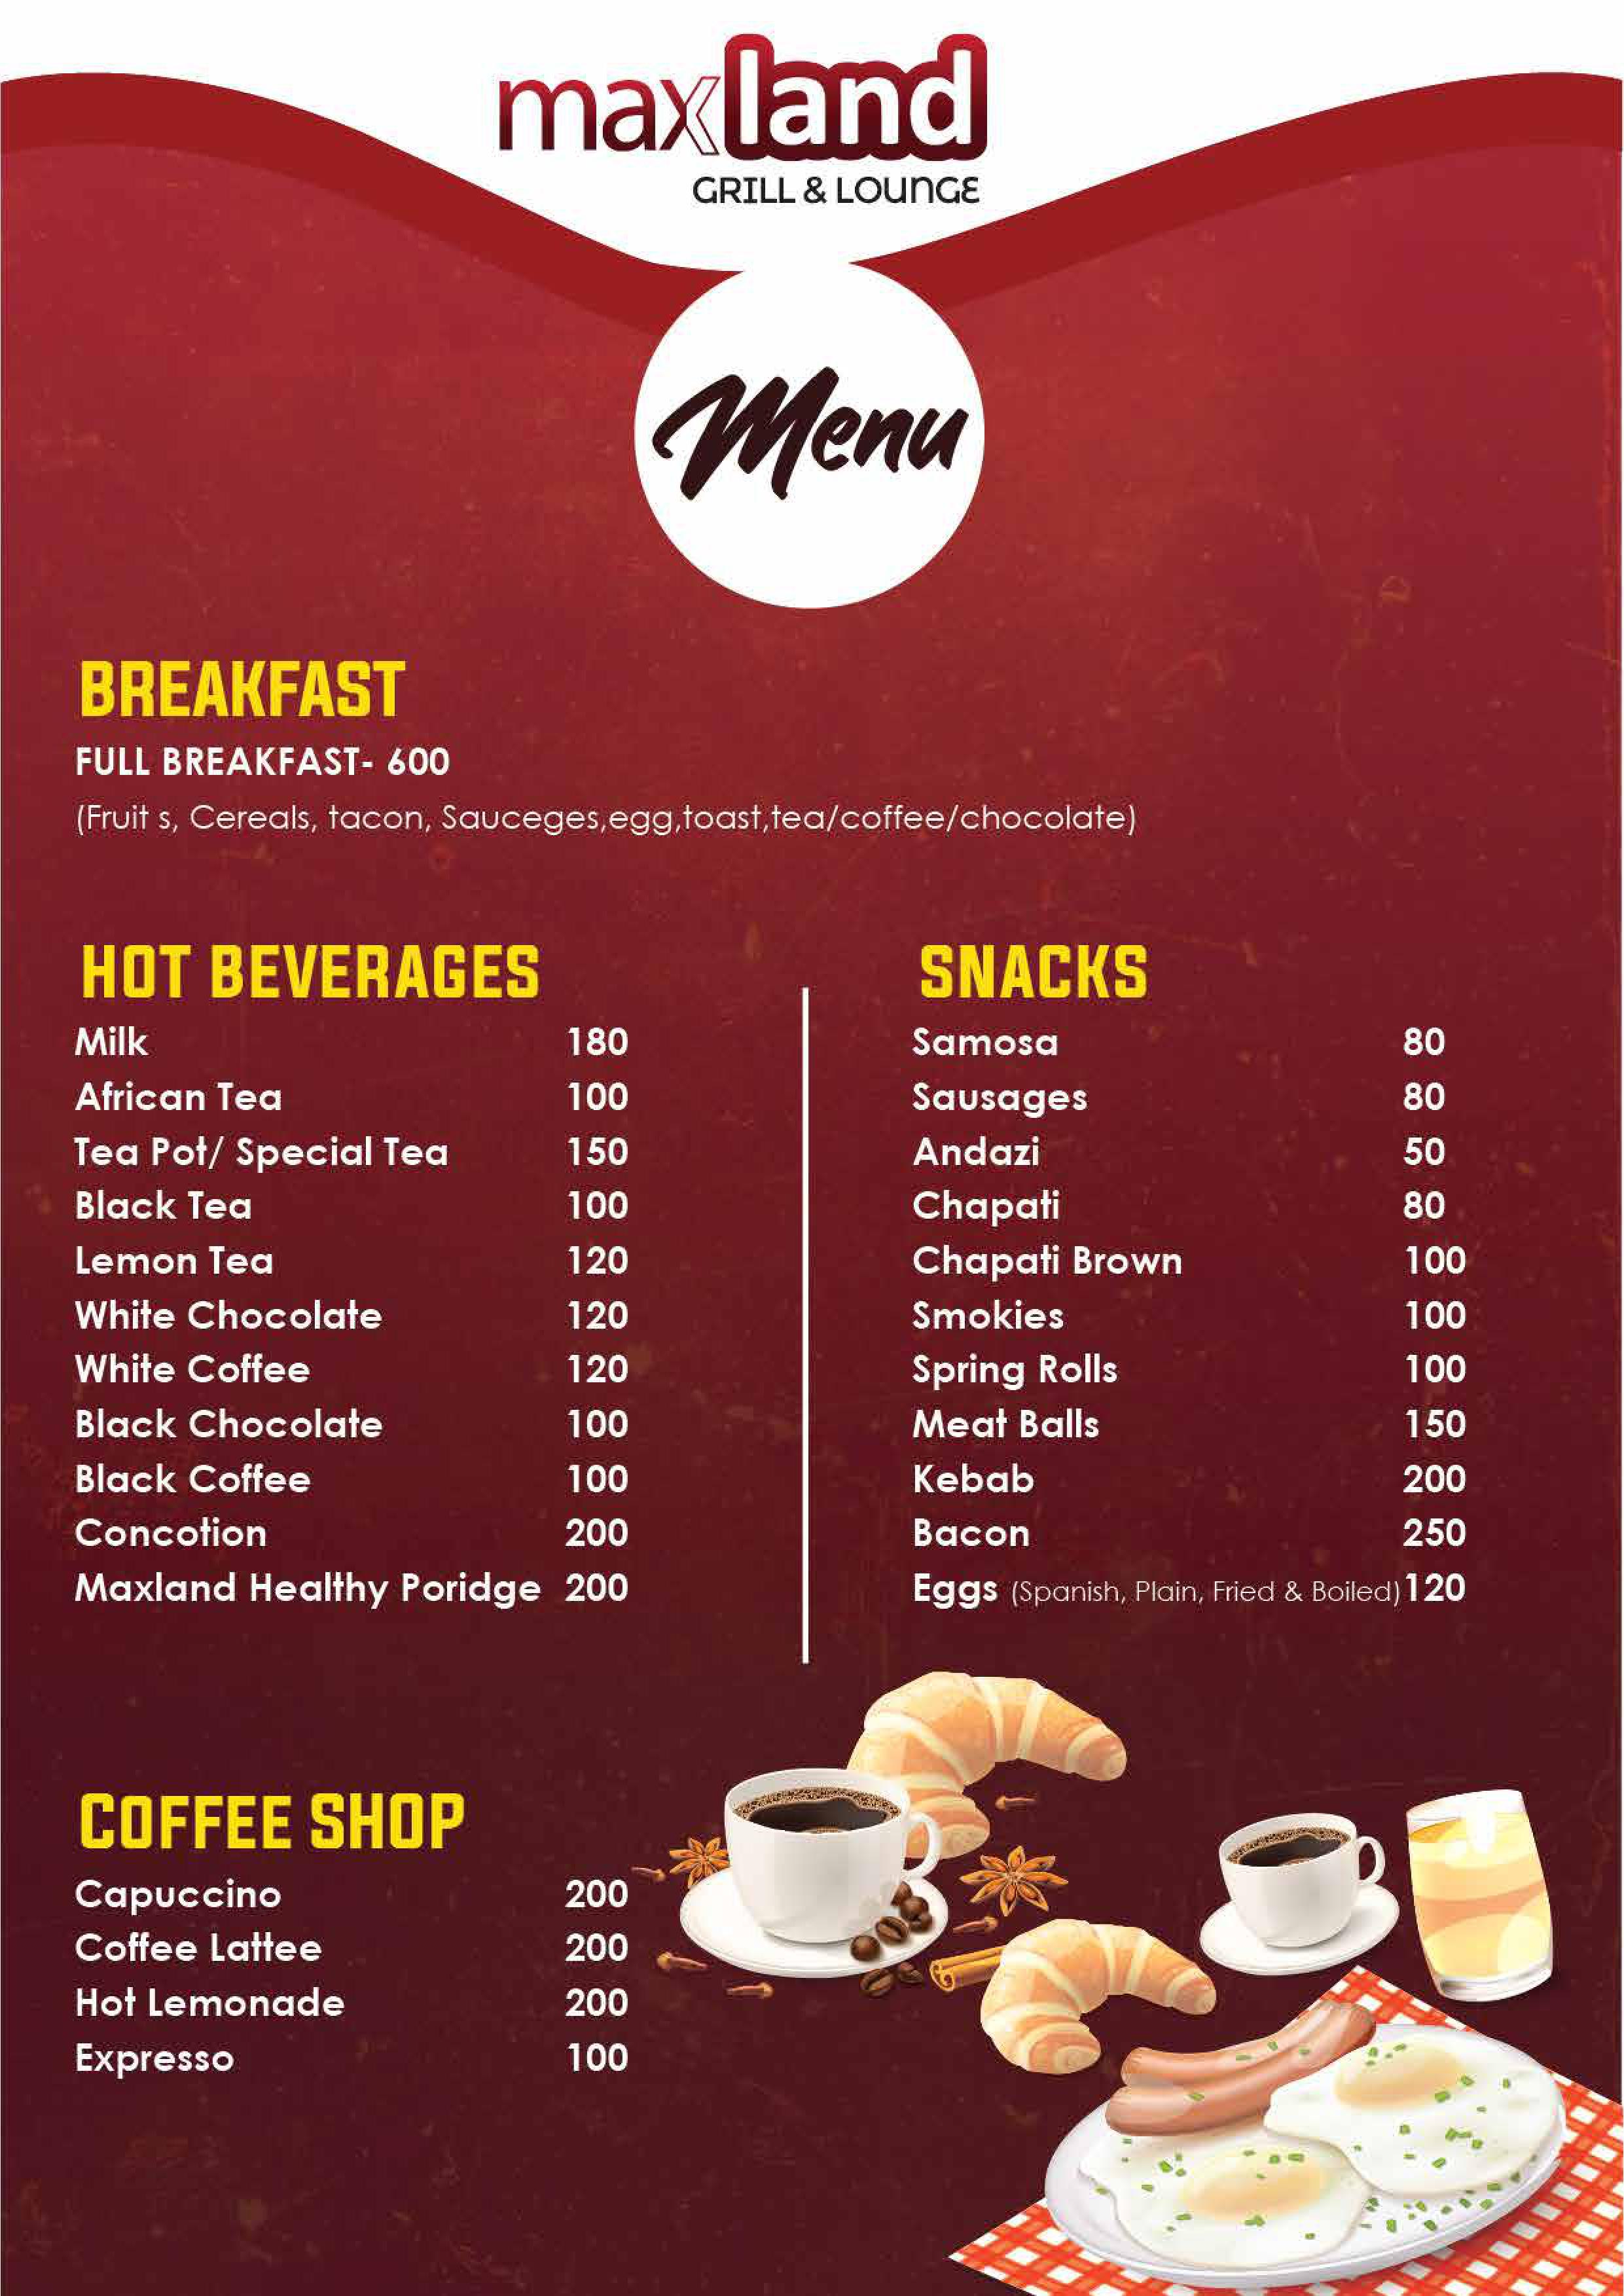 Maxland Waiyaki Way menu: Breakfast, hot beverages, coffee shop, and snacks